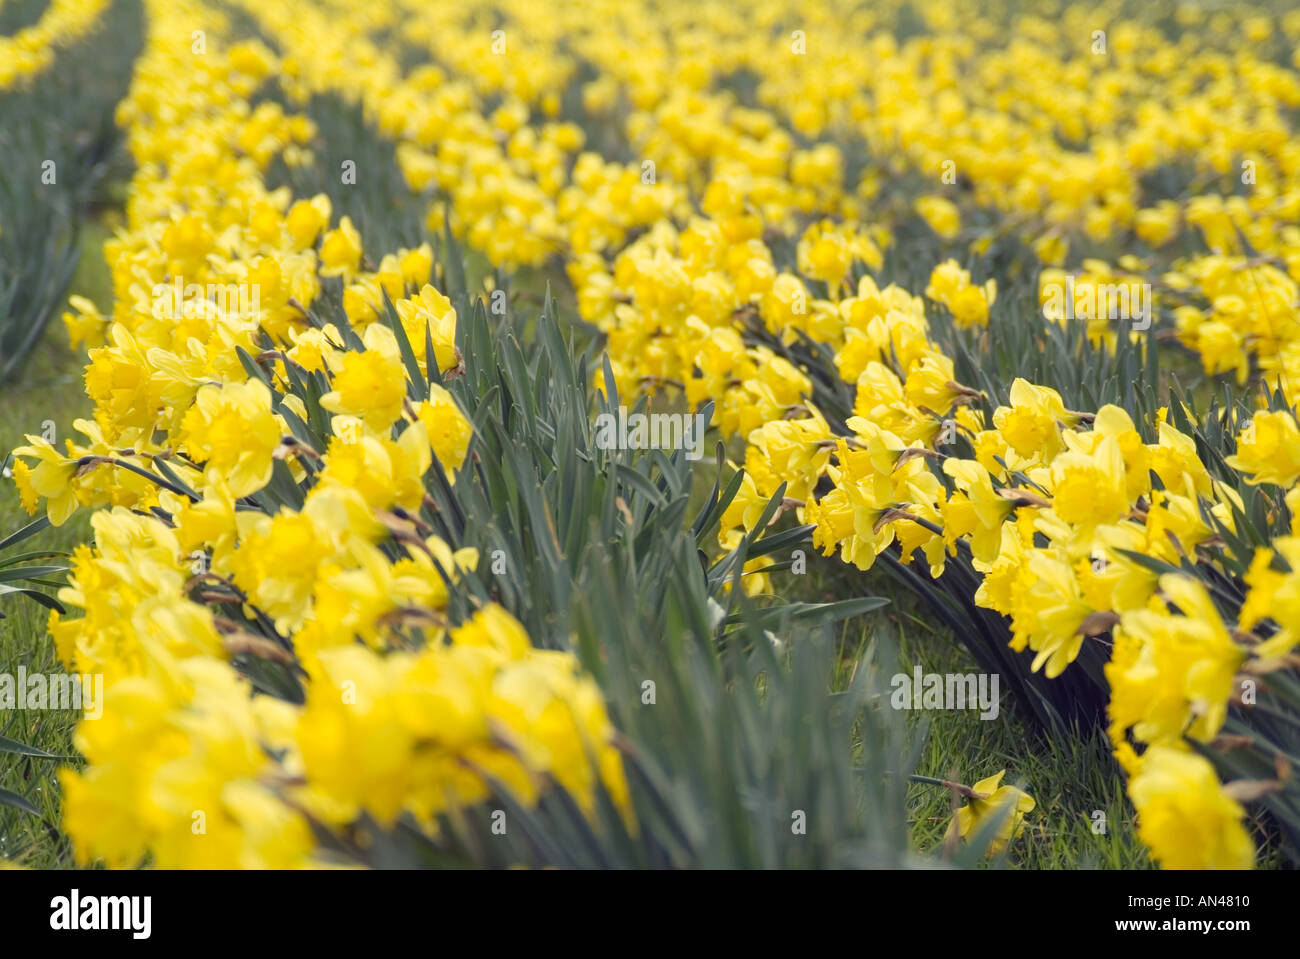 Narzissen Feld St David Tag Wales Walisisch Taffy Taff welsh Guards Blume gelb Petail Reihen wachsen Blumengeschäft Blumen Stockfoto